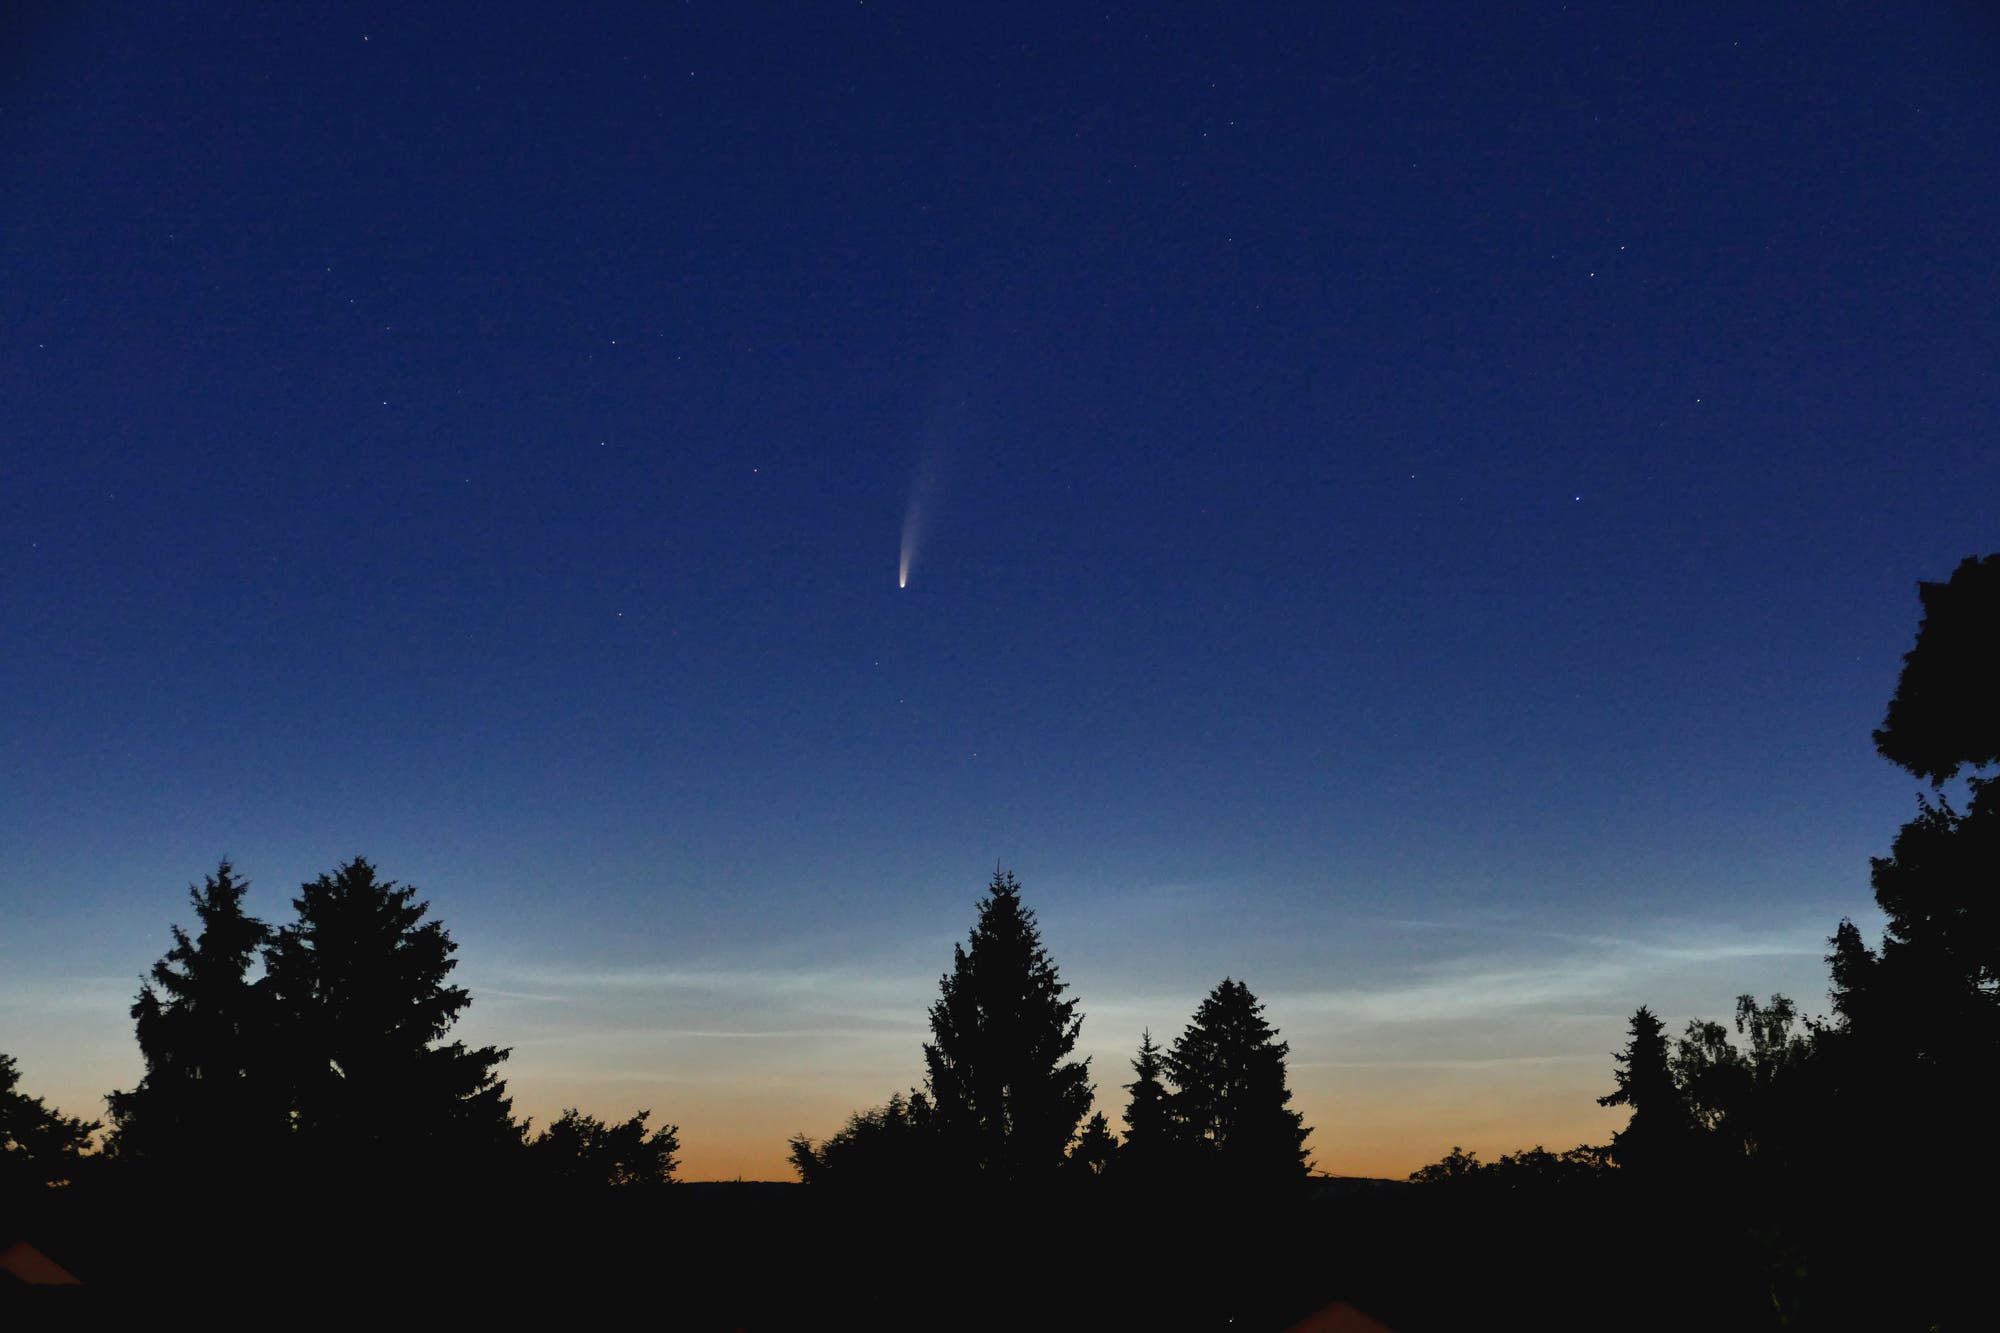 Komet Neowise am 10. Juli 2020